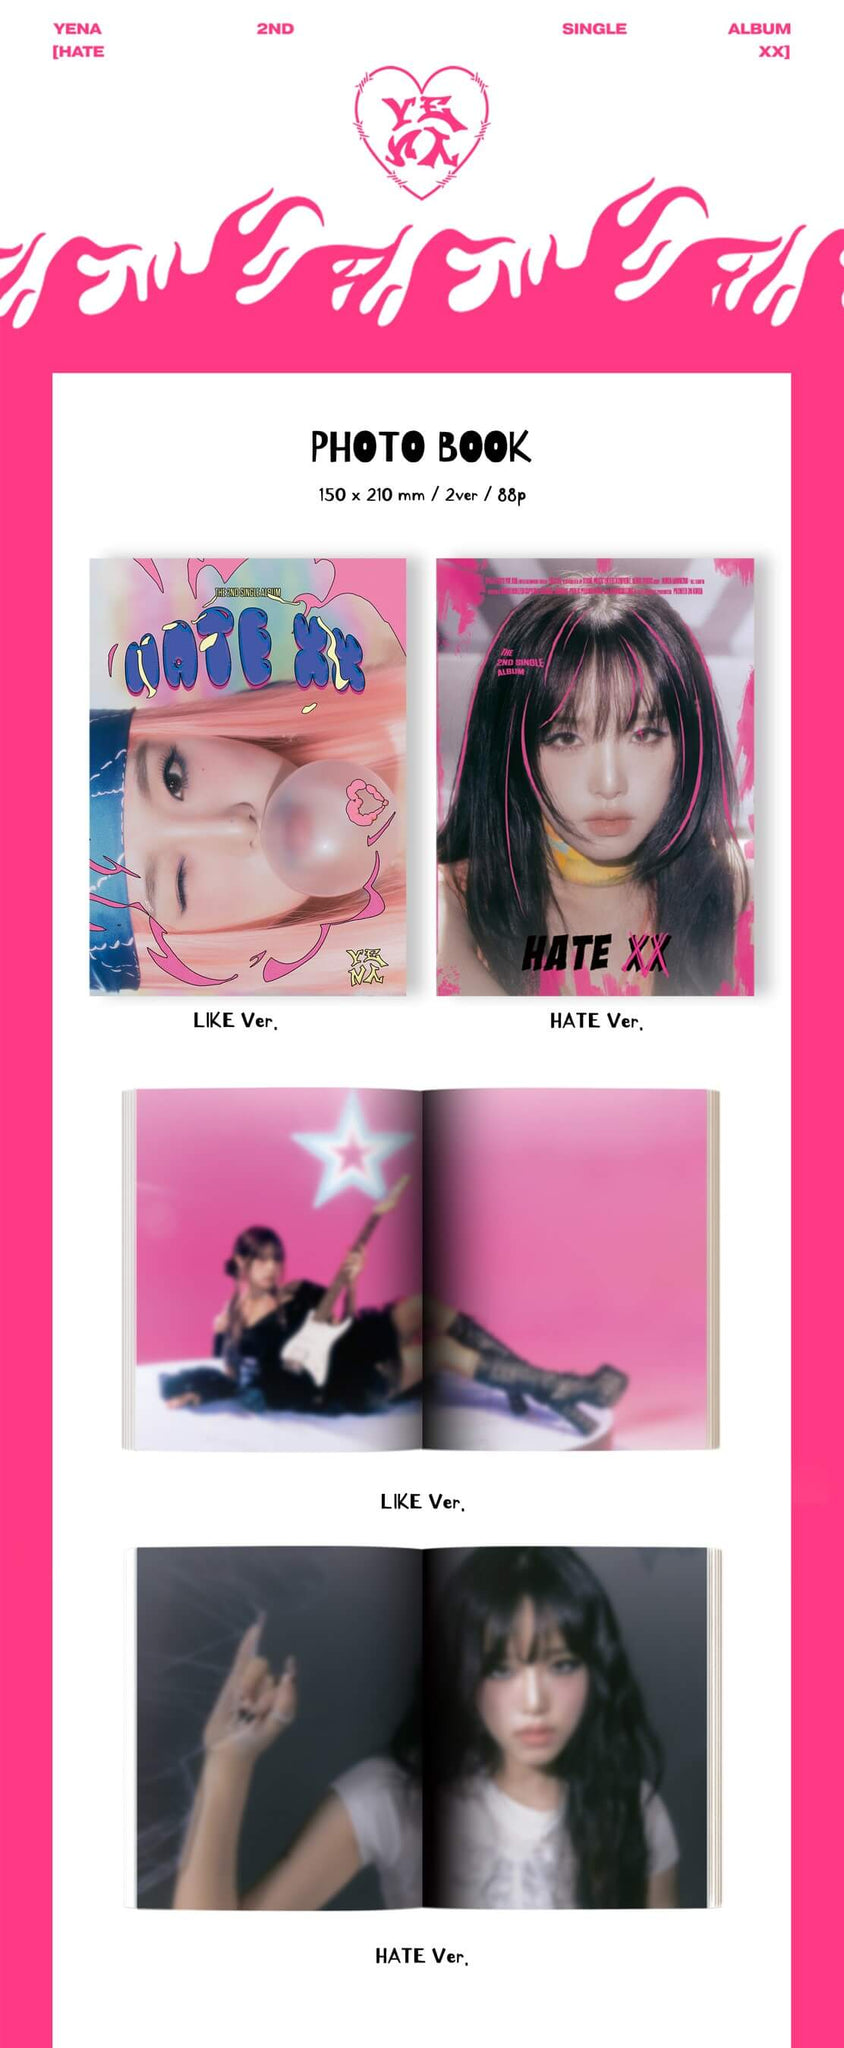  Yena 2nd Single Album HATE XX Inclusions Photobook